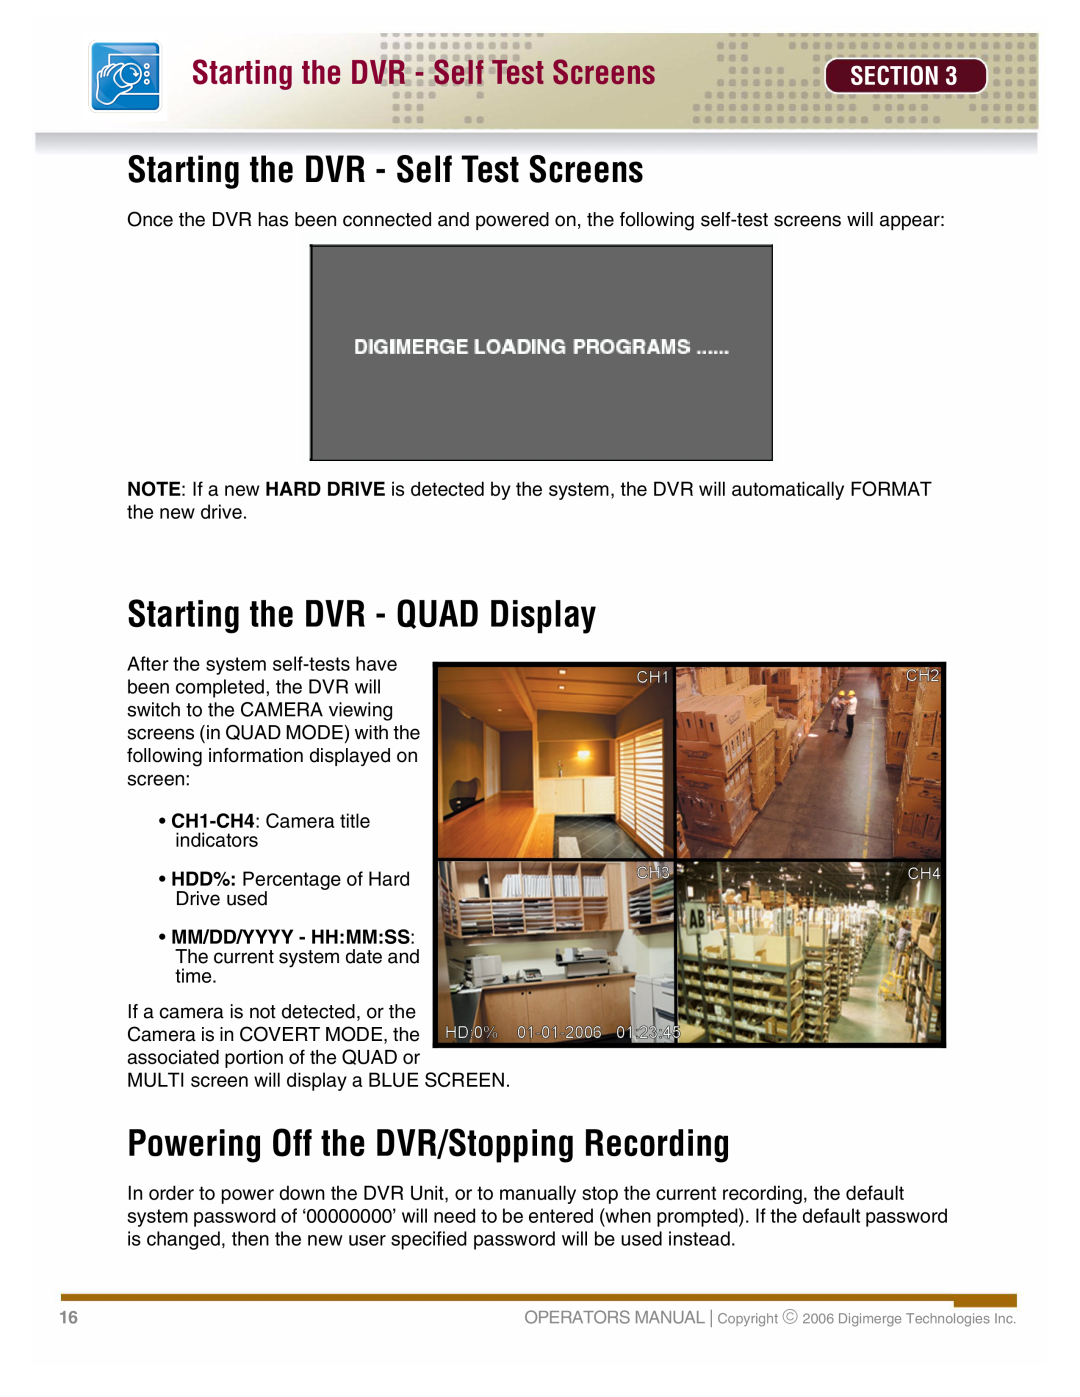 LOREX Technology DHU500 manual Starting the DVR - Self Test Screens, Starting the DVR - QUAD Display, Section 